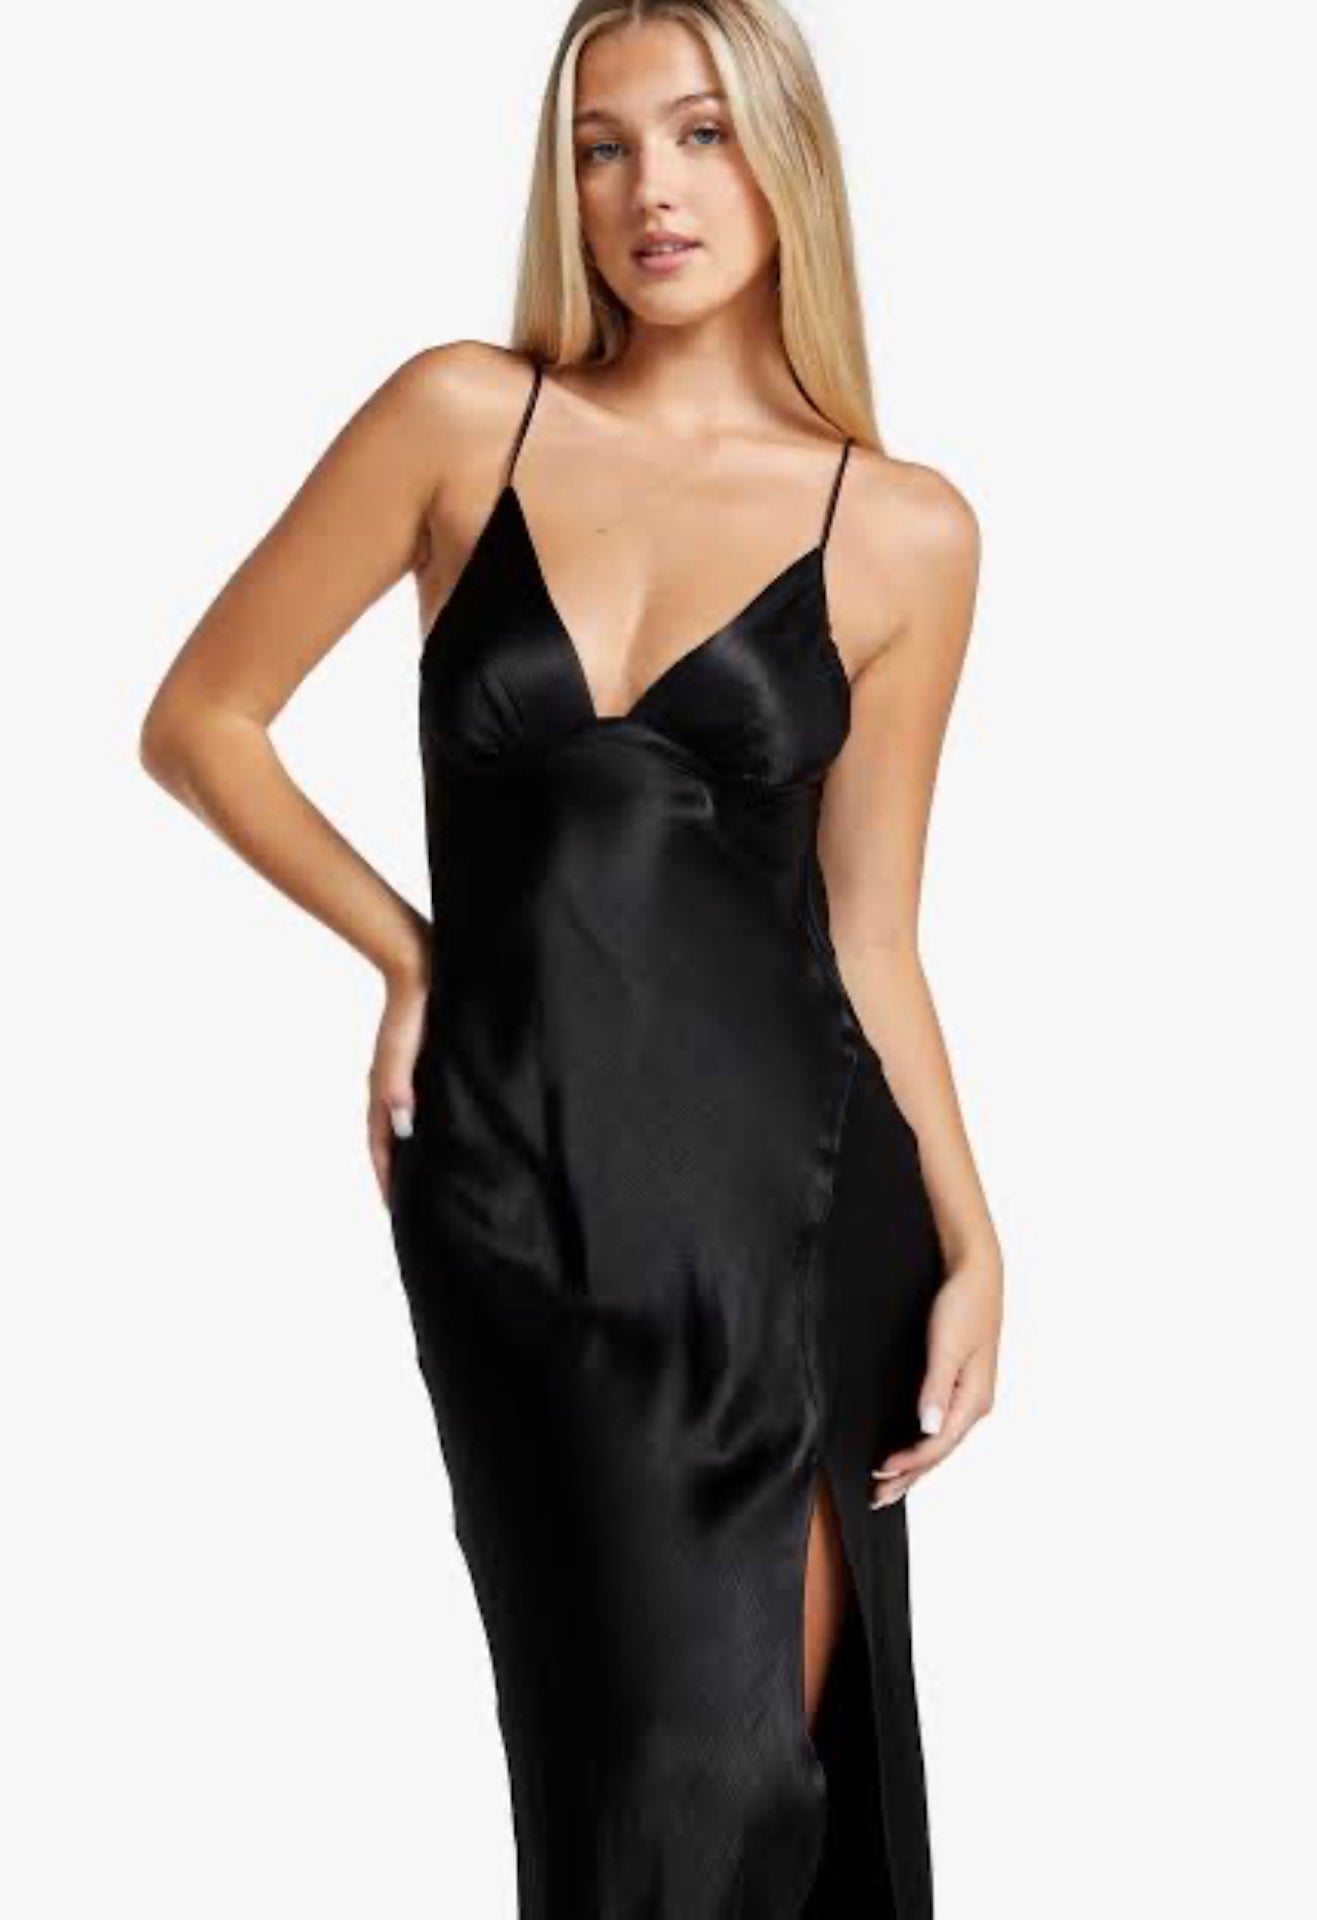 Bec & Bridge Ren Ball dress with side split in black